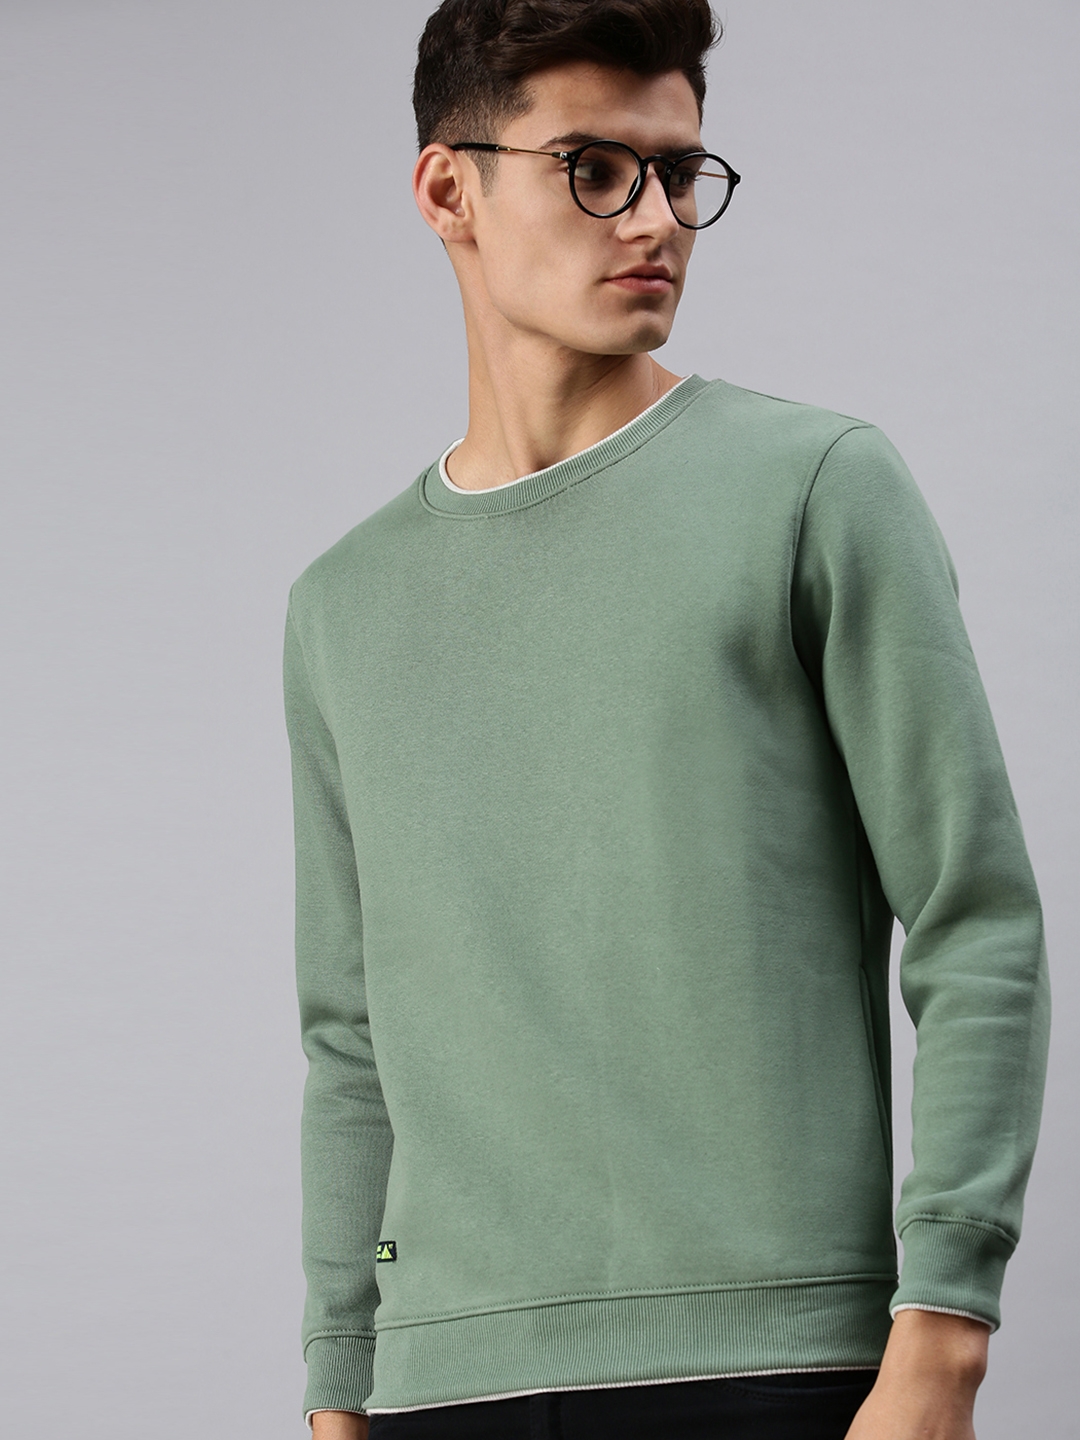 Men's Green Cotton Solid Sweatshirts